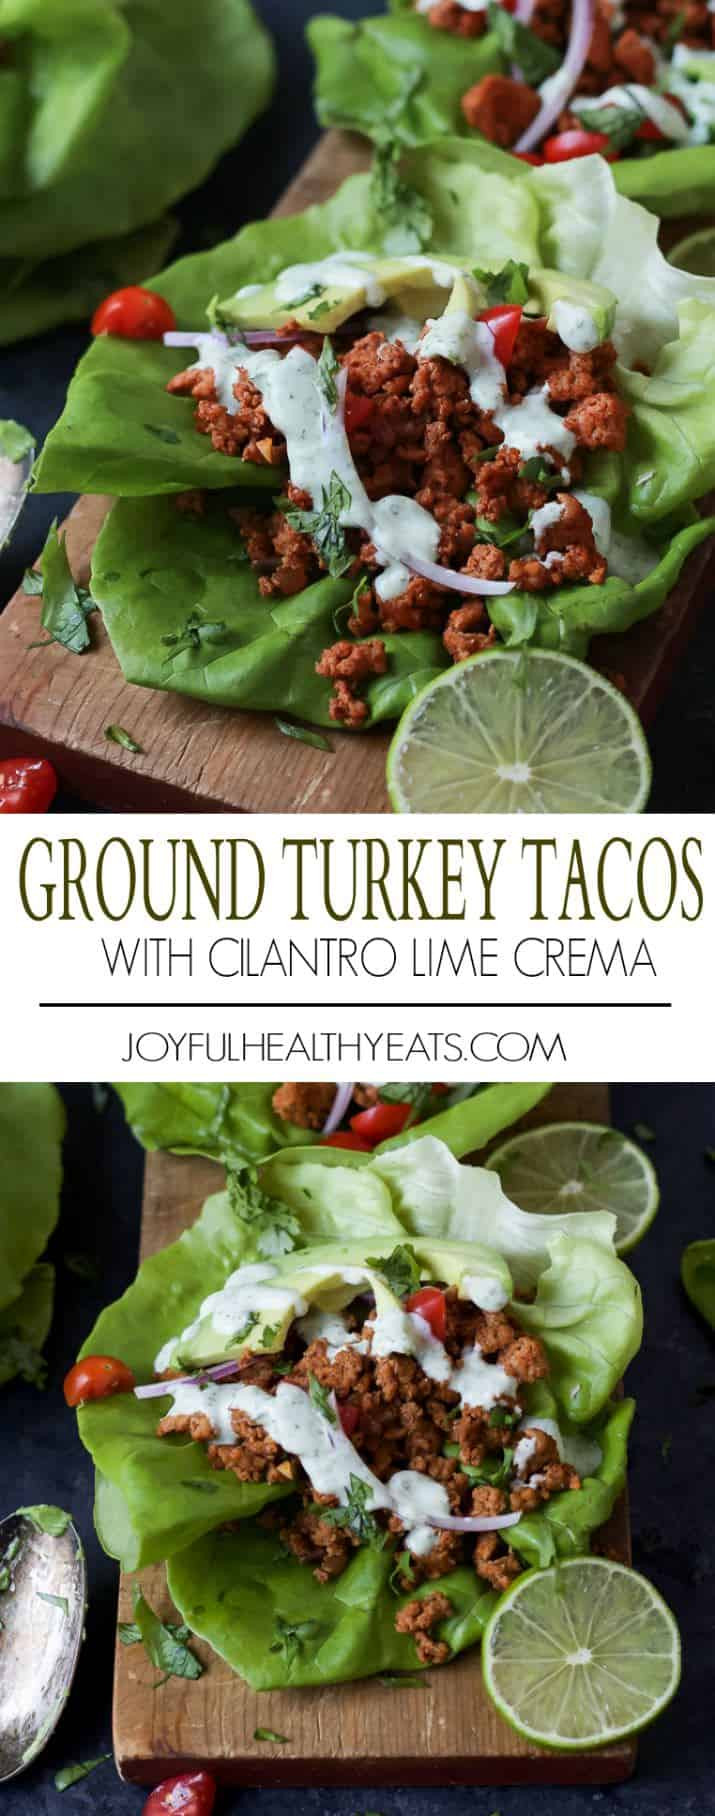 Ground Turkey Taco Recipes
 Ground Turkey Tacos in Lettuce Wraps with Cilantro Lime Crema